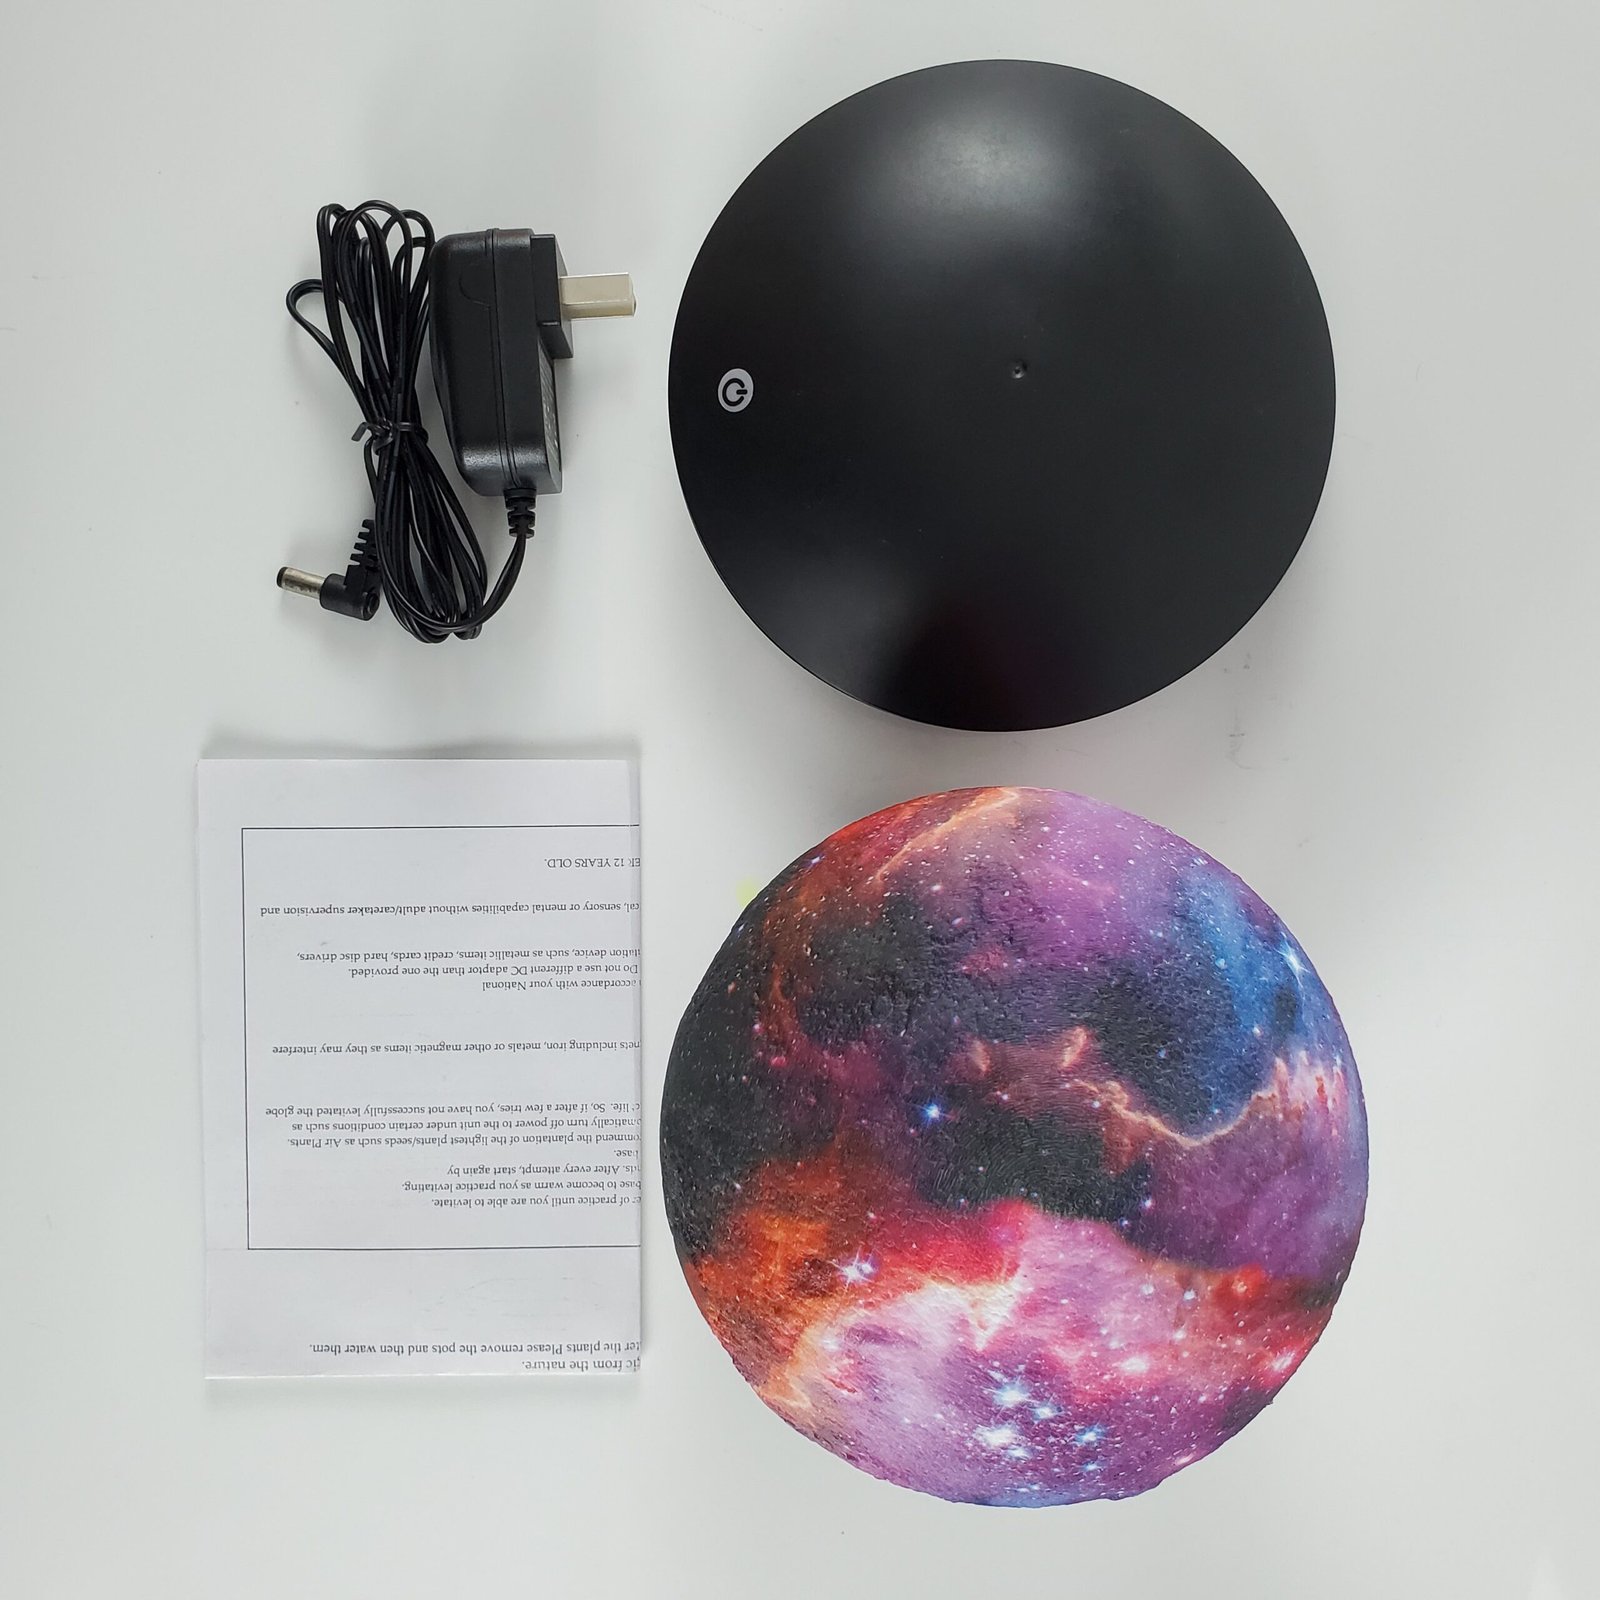 LED Magnetic Levitation Floating Globe ( M005B-22 ) - HCNT Levitation